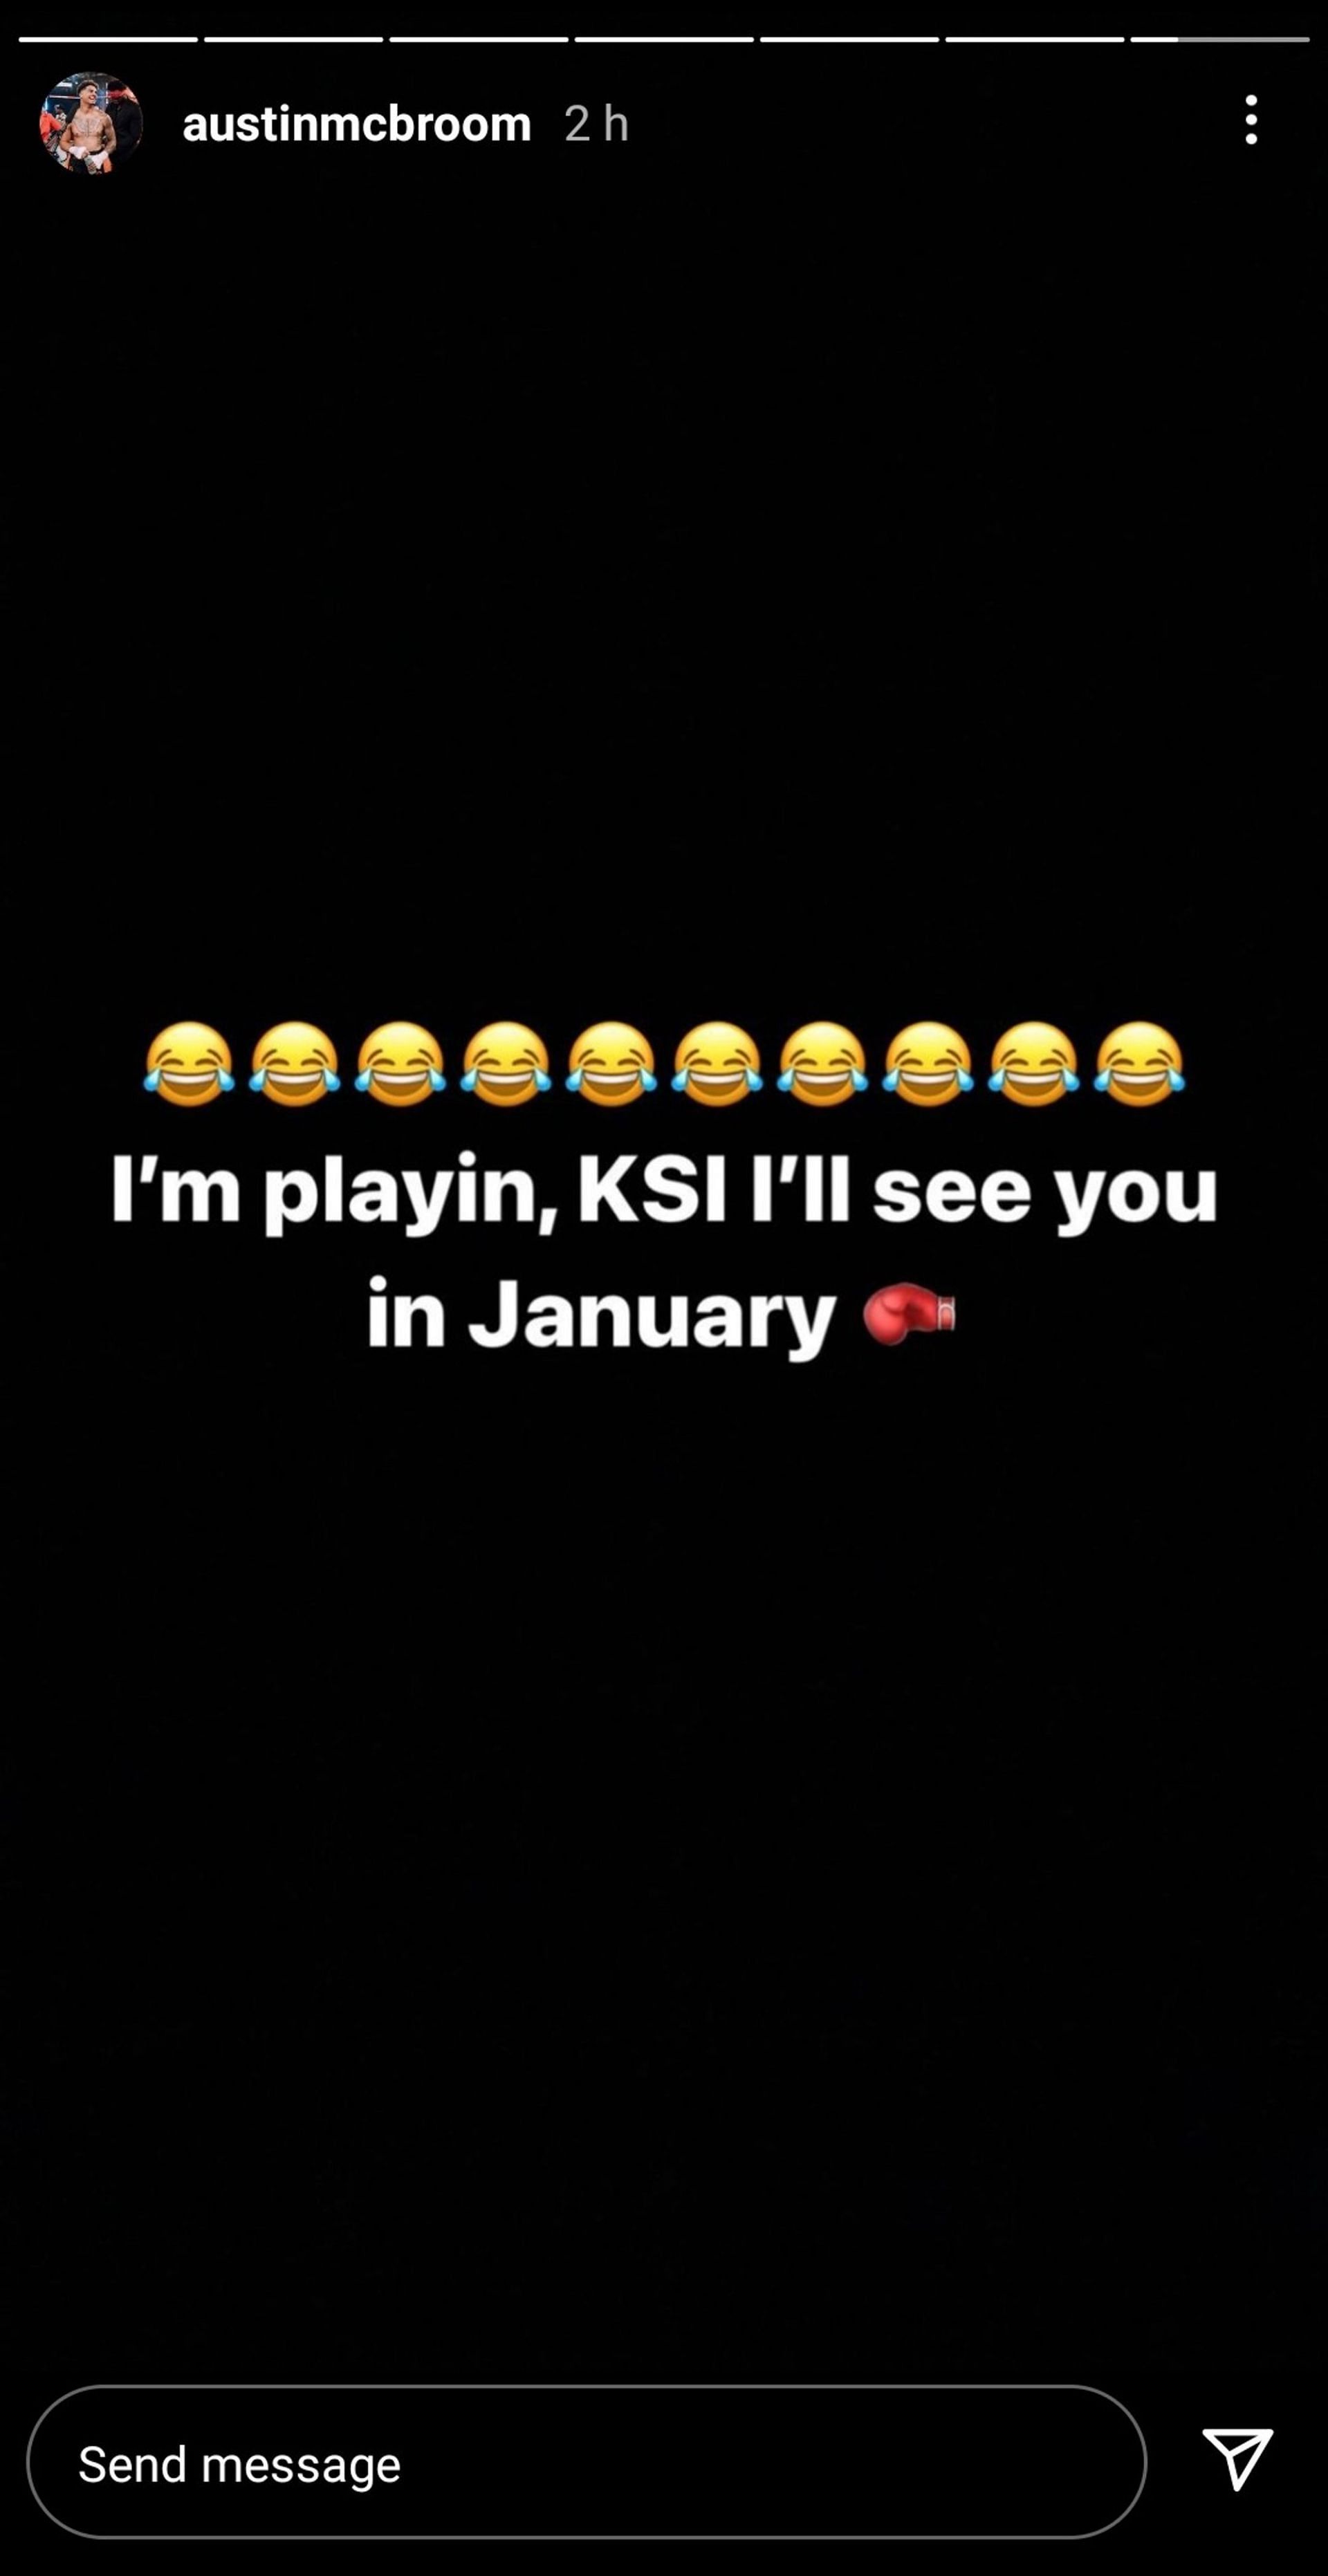 Austin McBroom announces on Instagram that he is fighting KSI in January (Image via austinmcbroom/ Instagram)